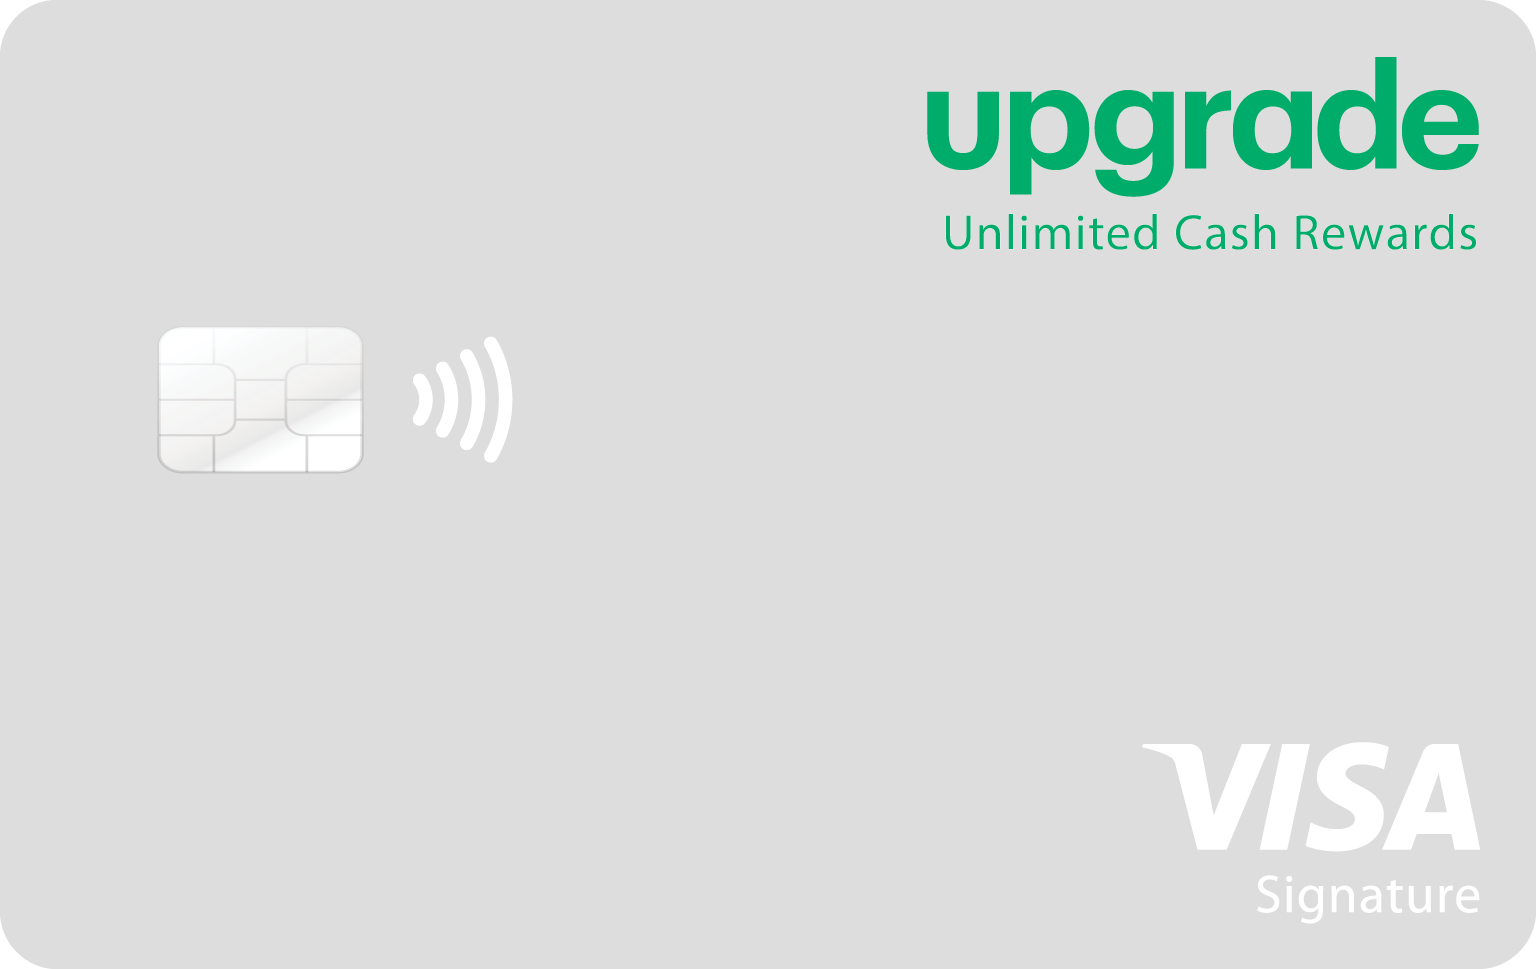 Upgrade Unlimited Cash Rewards Visa®